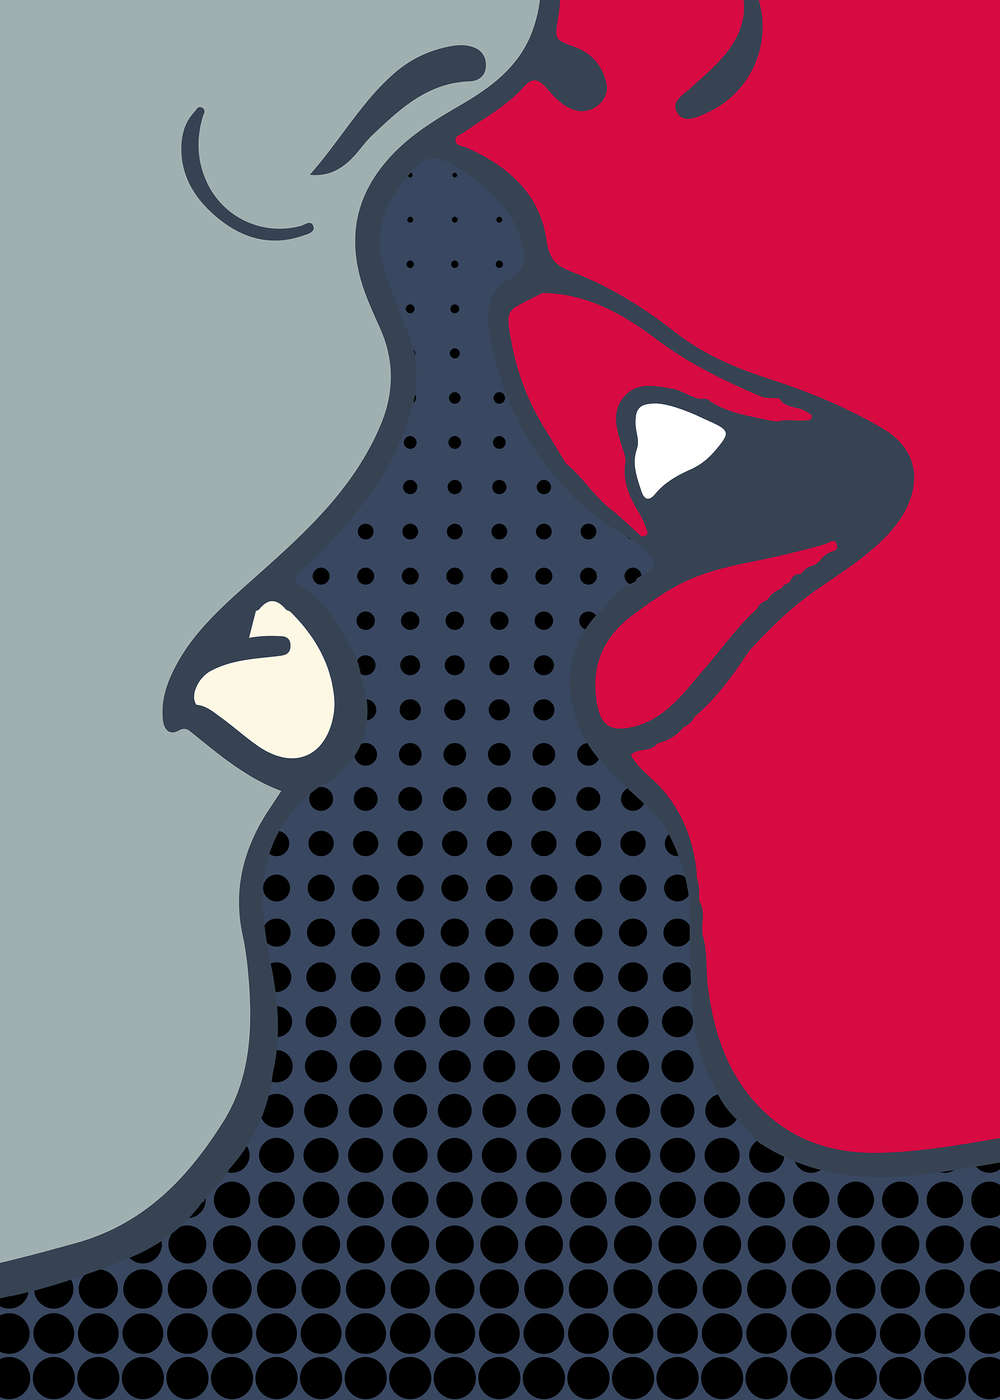             La carta da parati Kiss Design Pop Art - Blu, rosso
        